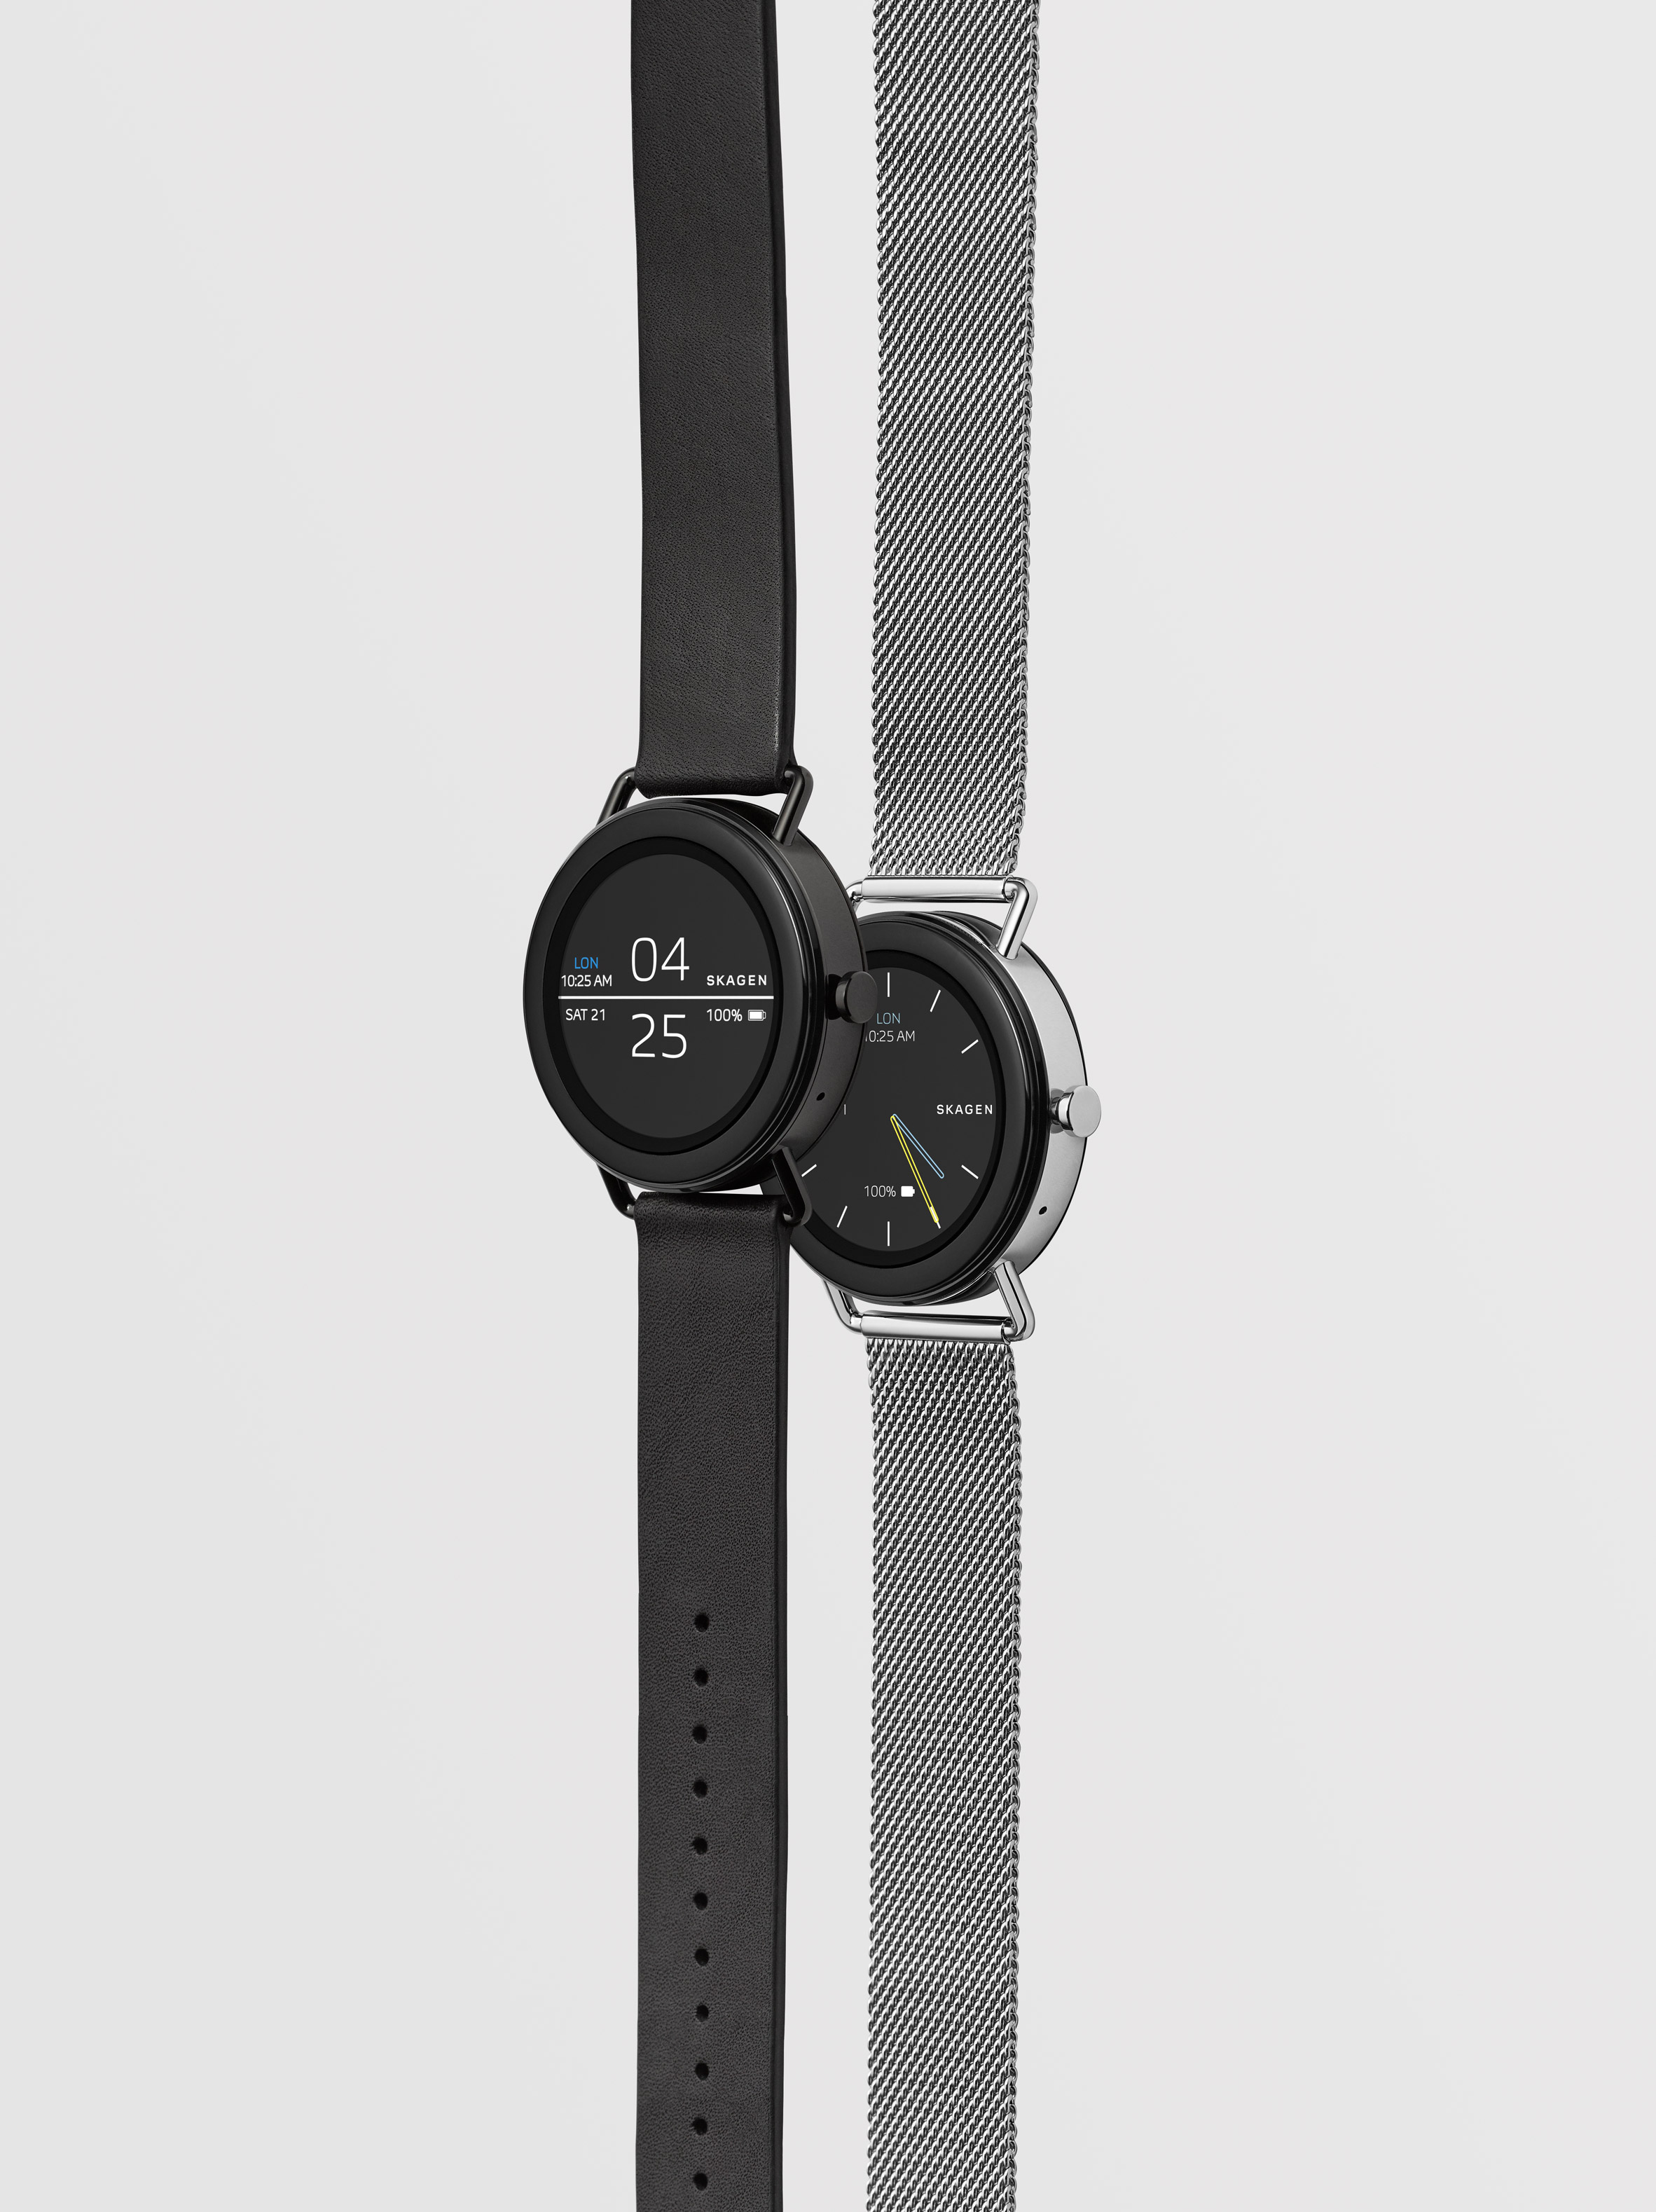 Skagen's minimal smartwatch made without "unnecessary